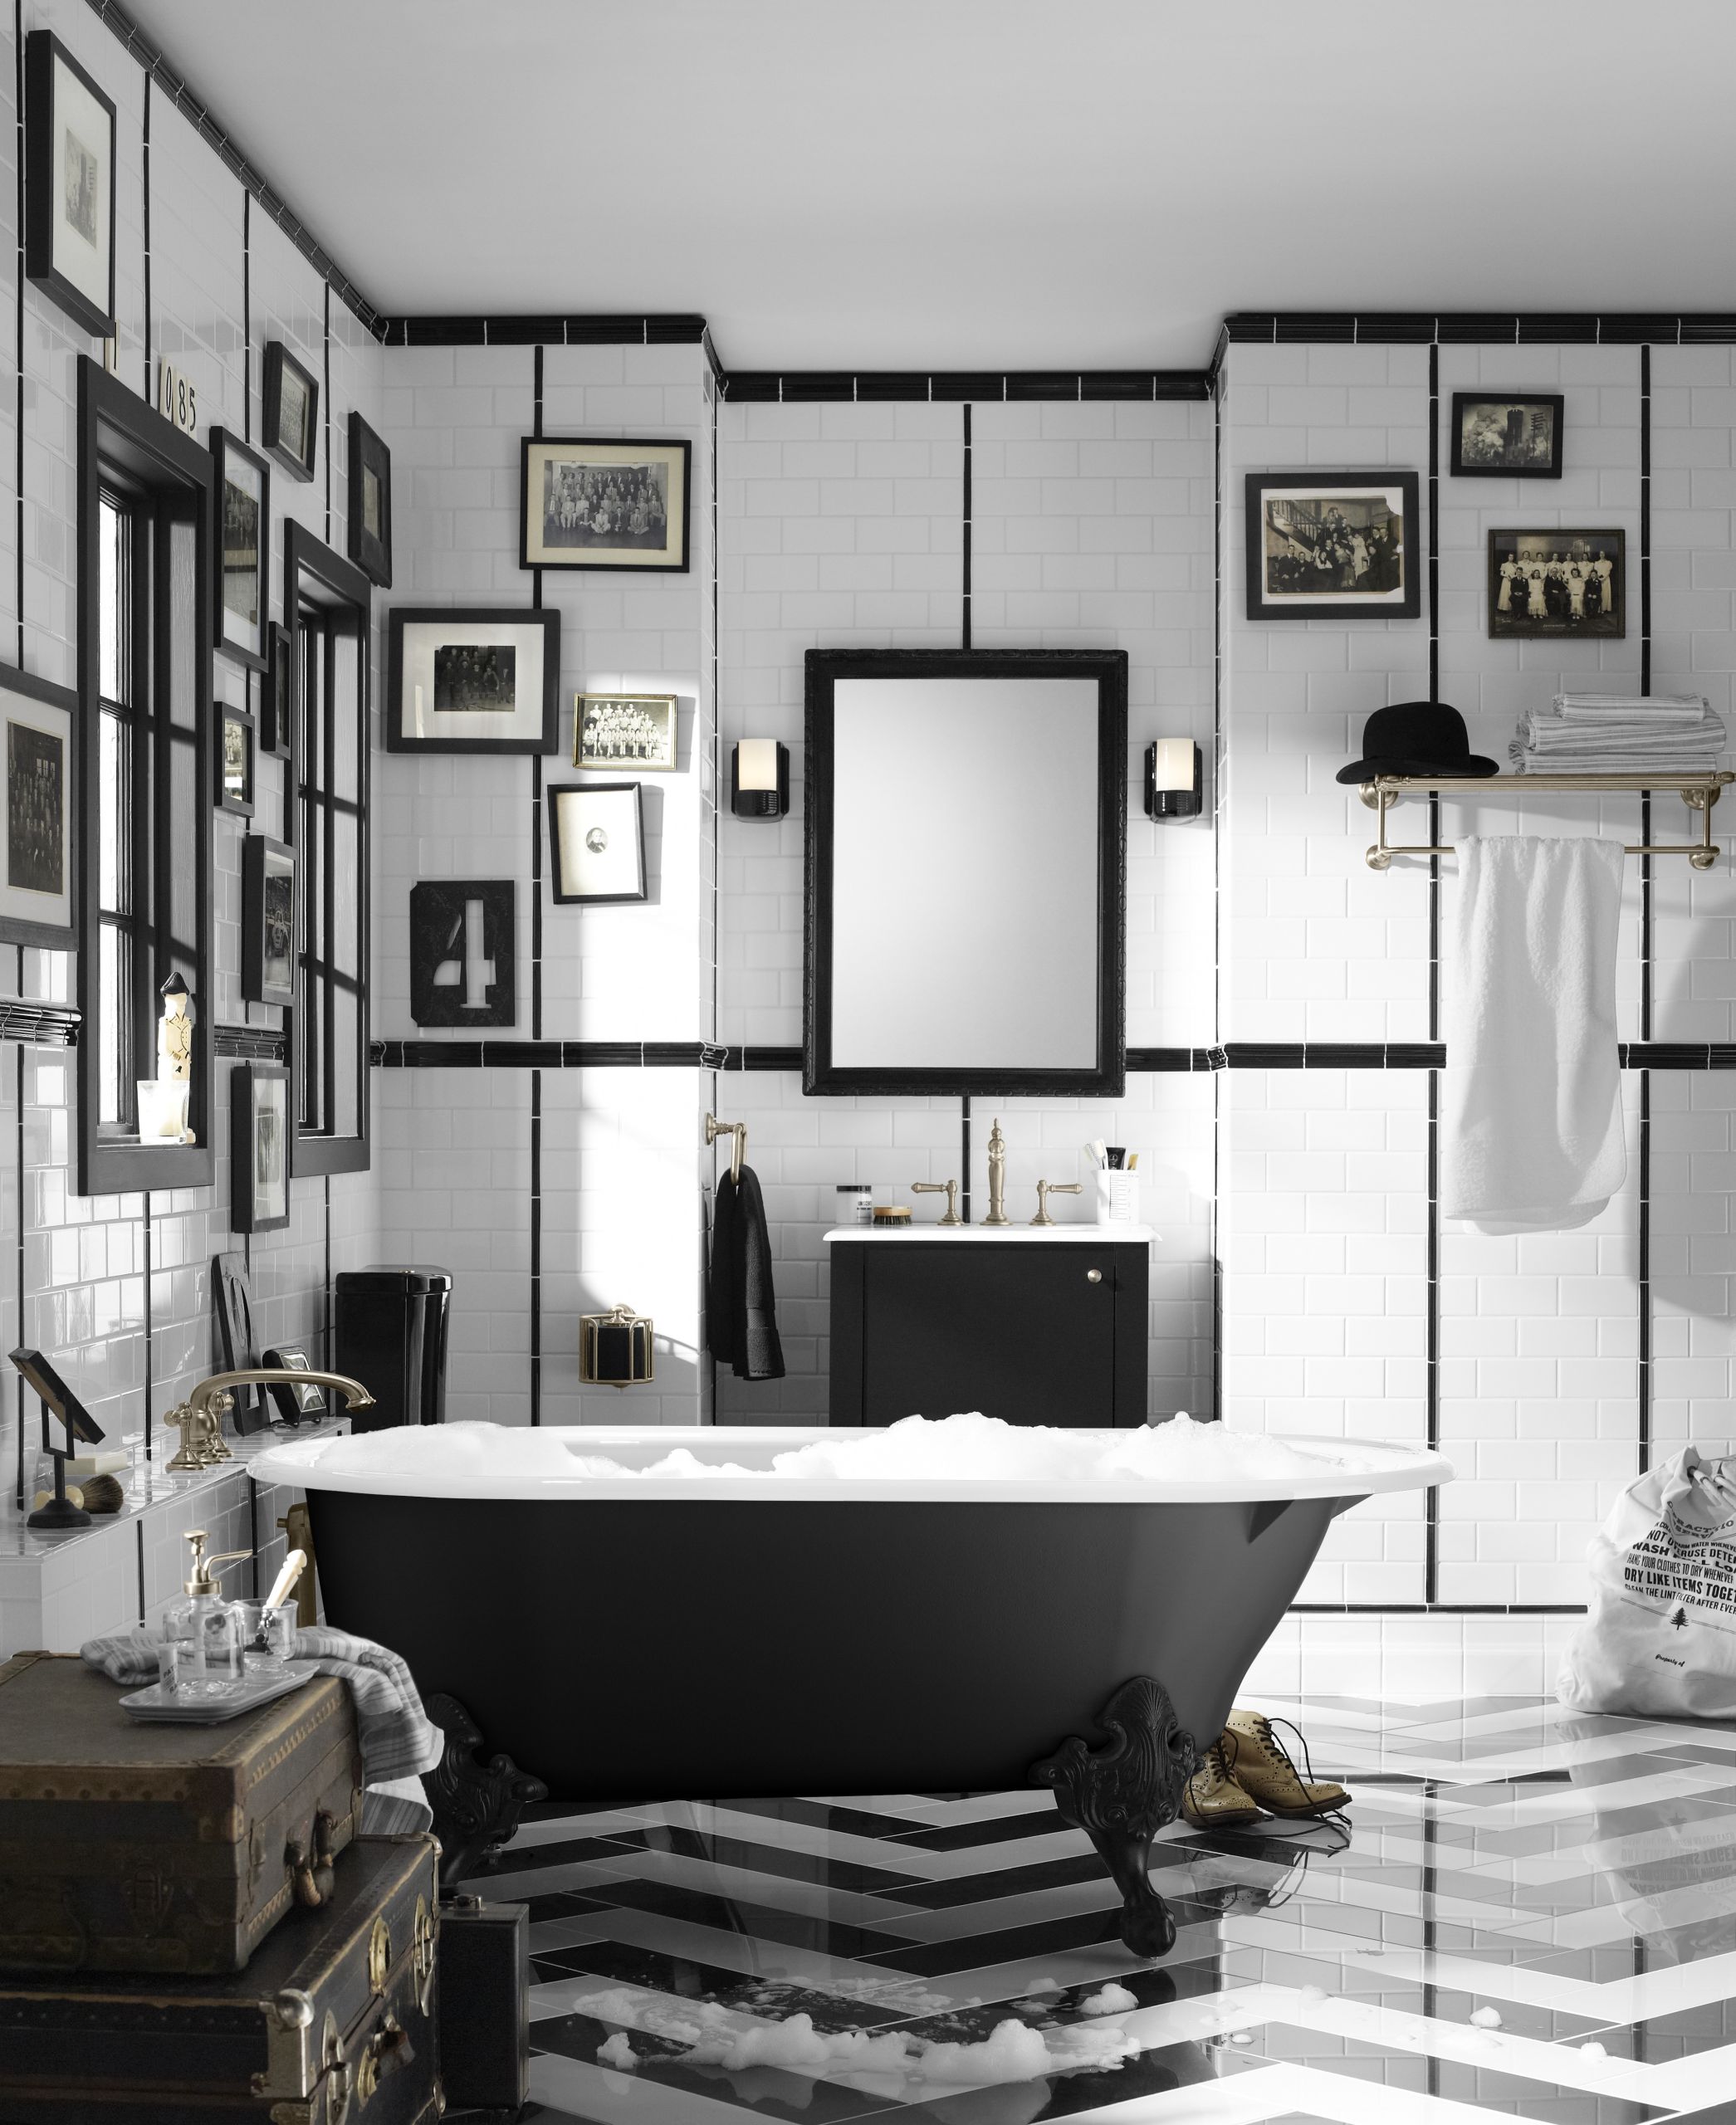 Kohler Bathroom Design
 10 Stunning Bathrooms and Kitchens by Kohler s New